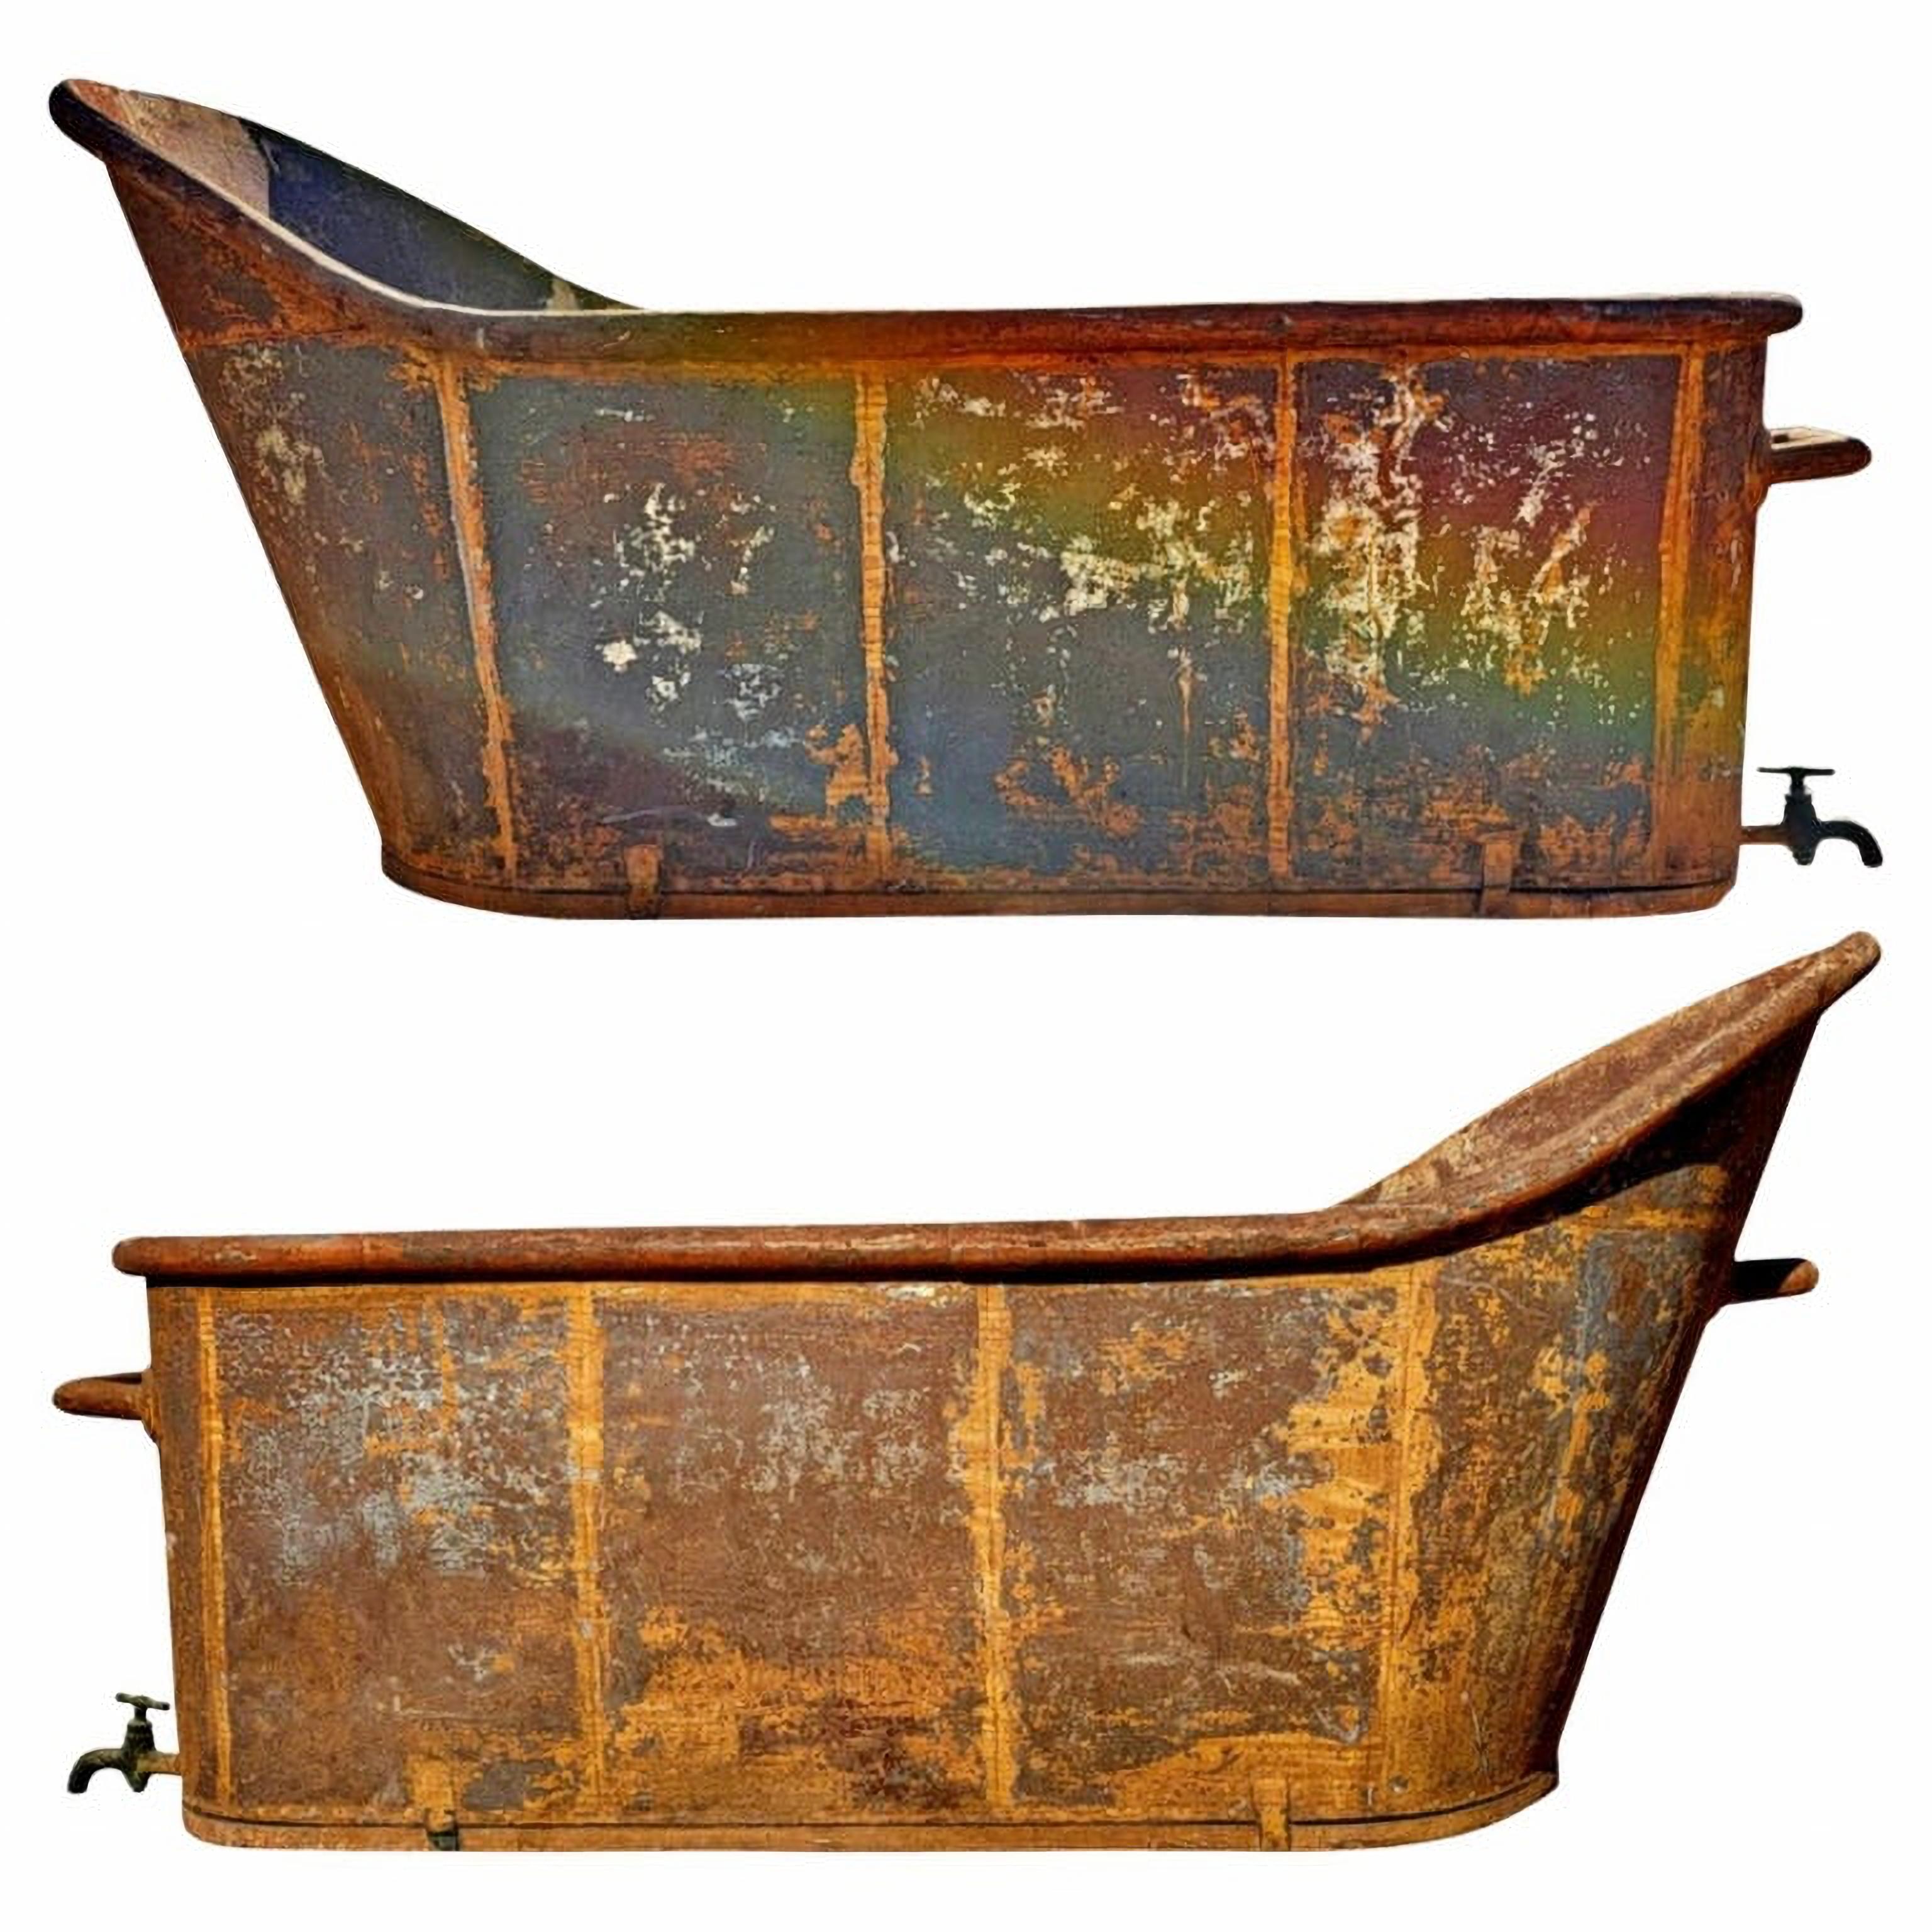 Hand-Crafted Amazing Original Italian Steel Bathtub from 1780/1800 19th Century For Sale